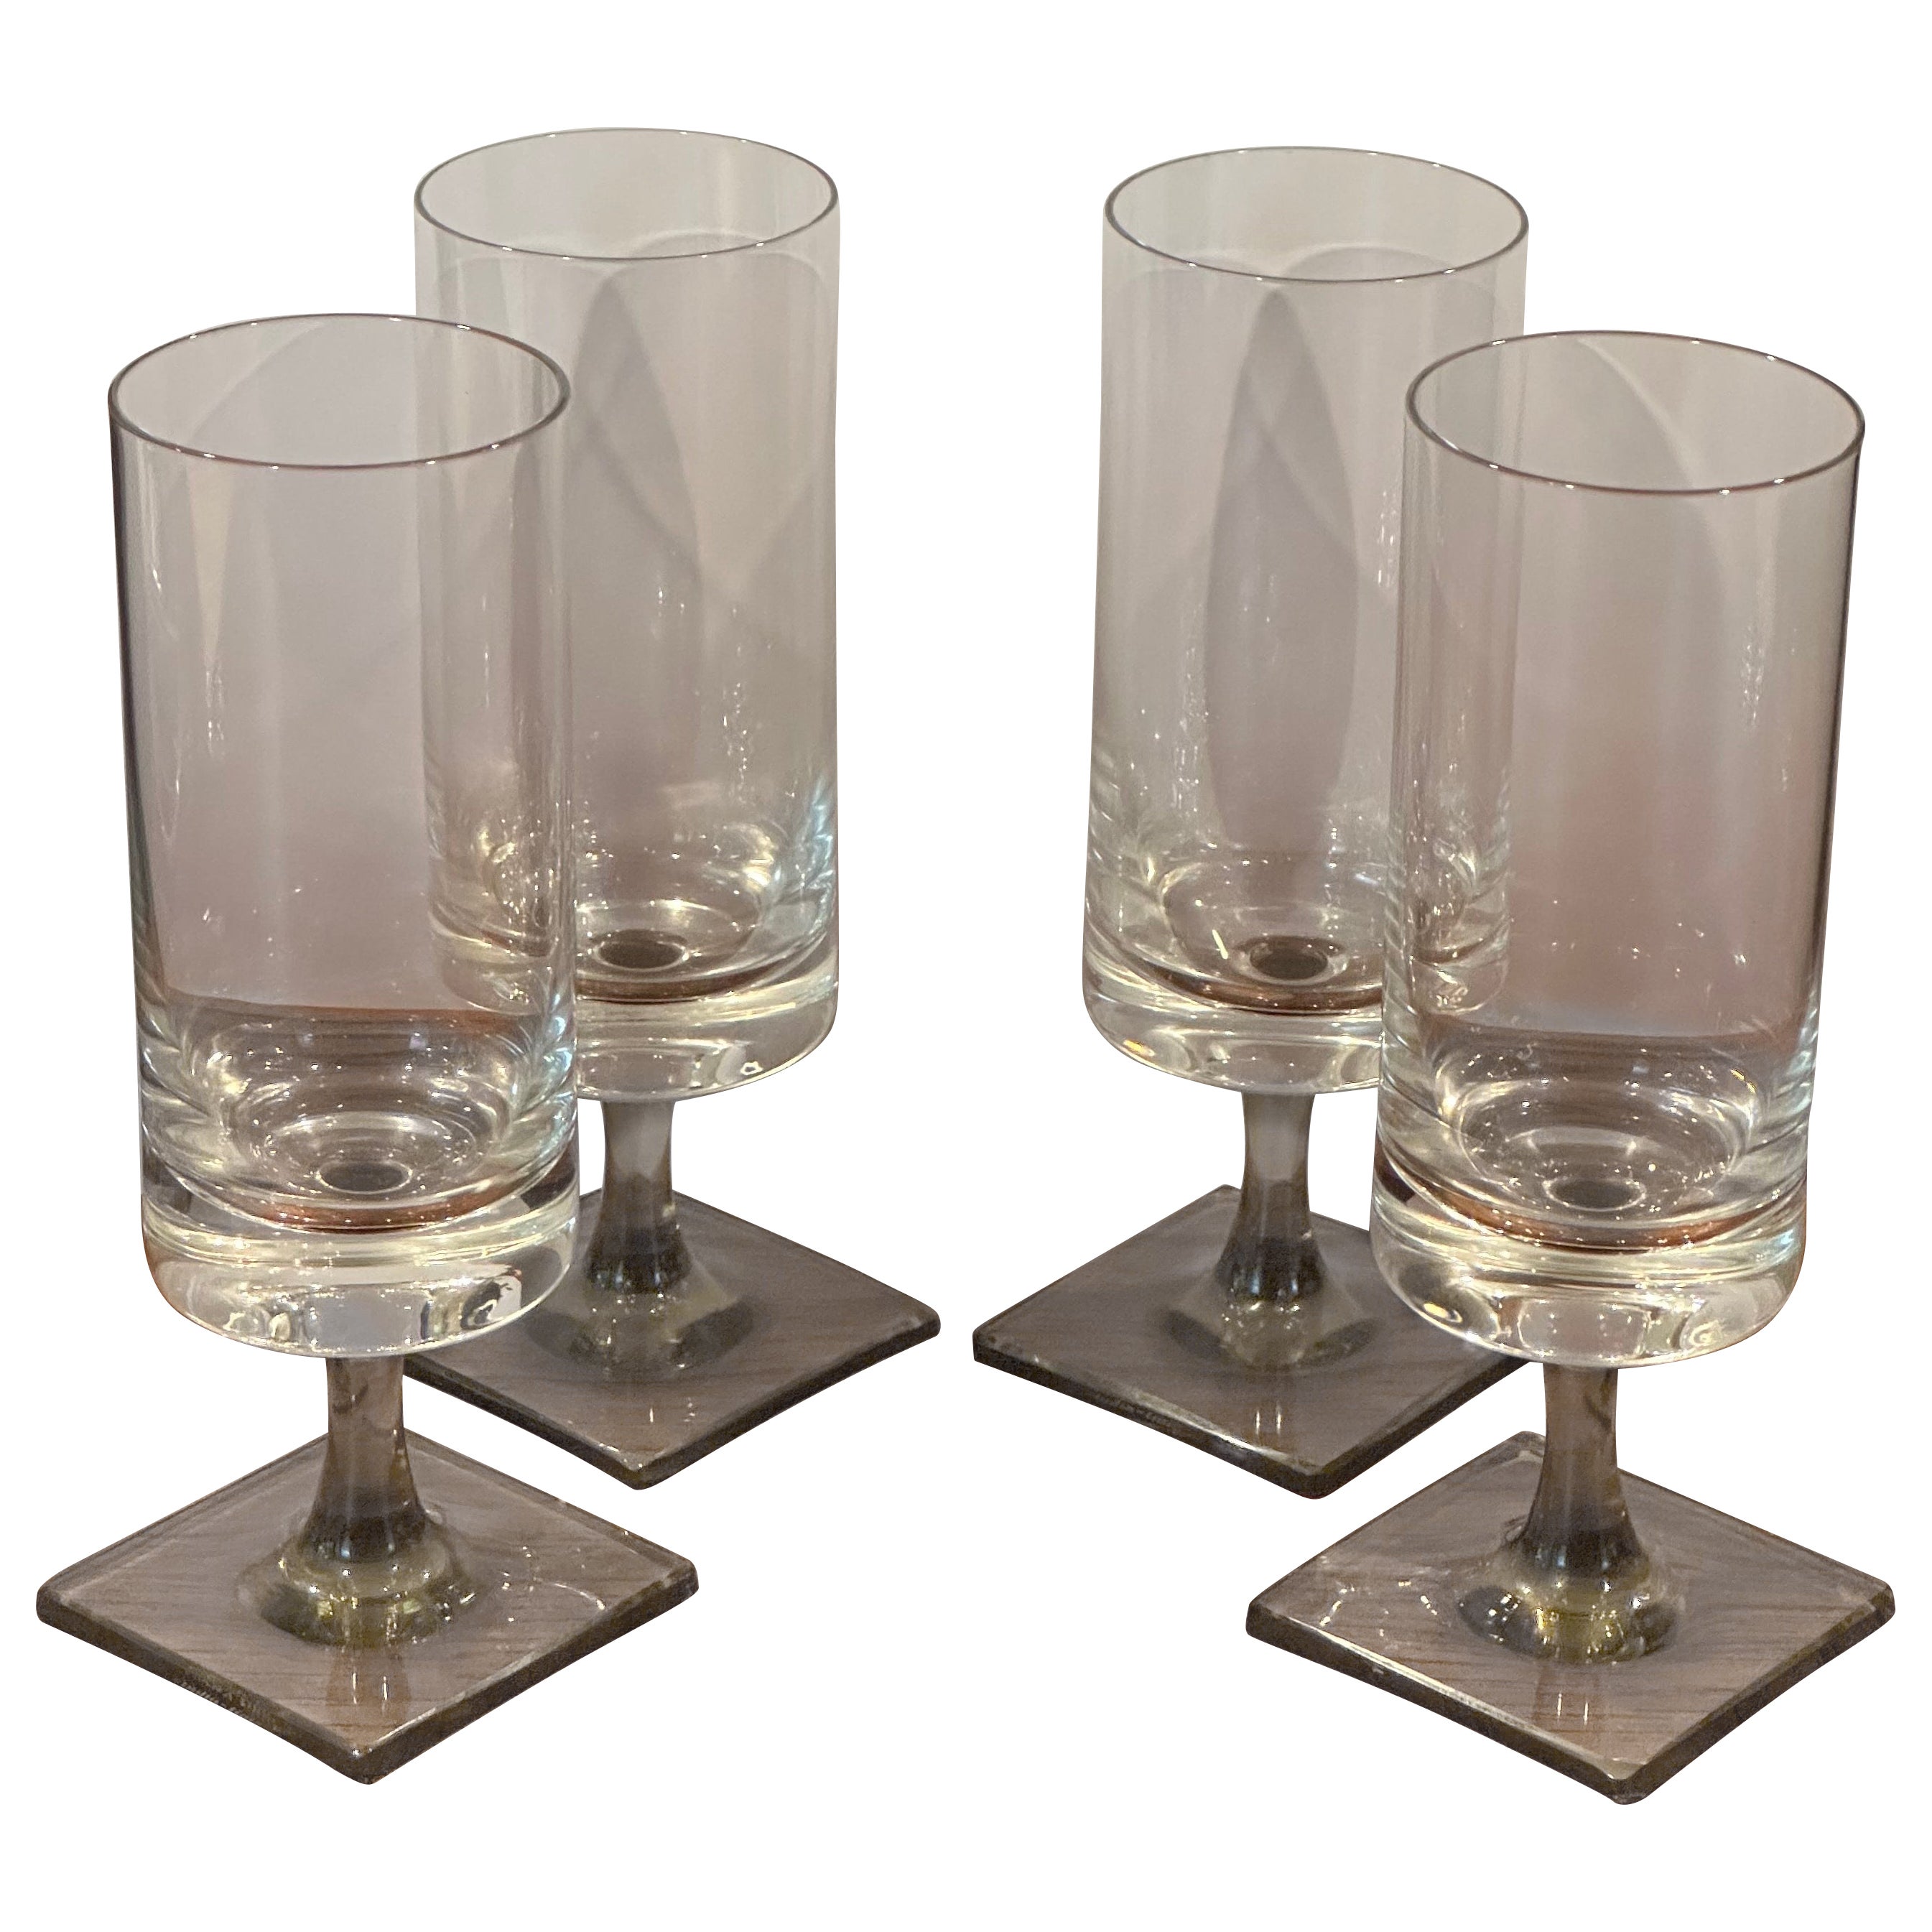 Set of Four "Berlin" Square Base Juice Glasses by G. Butler Jensen for Rosenthal